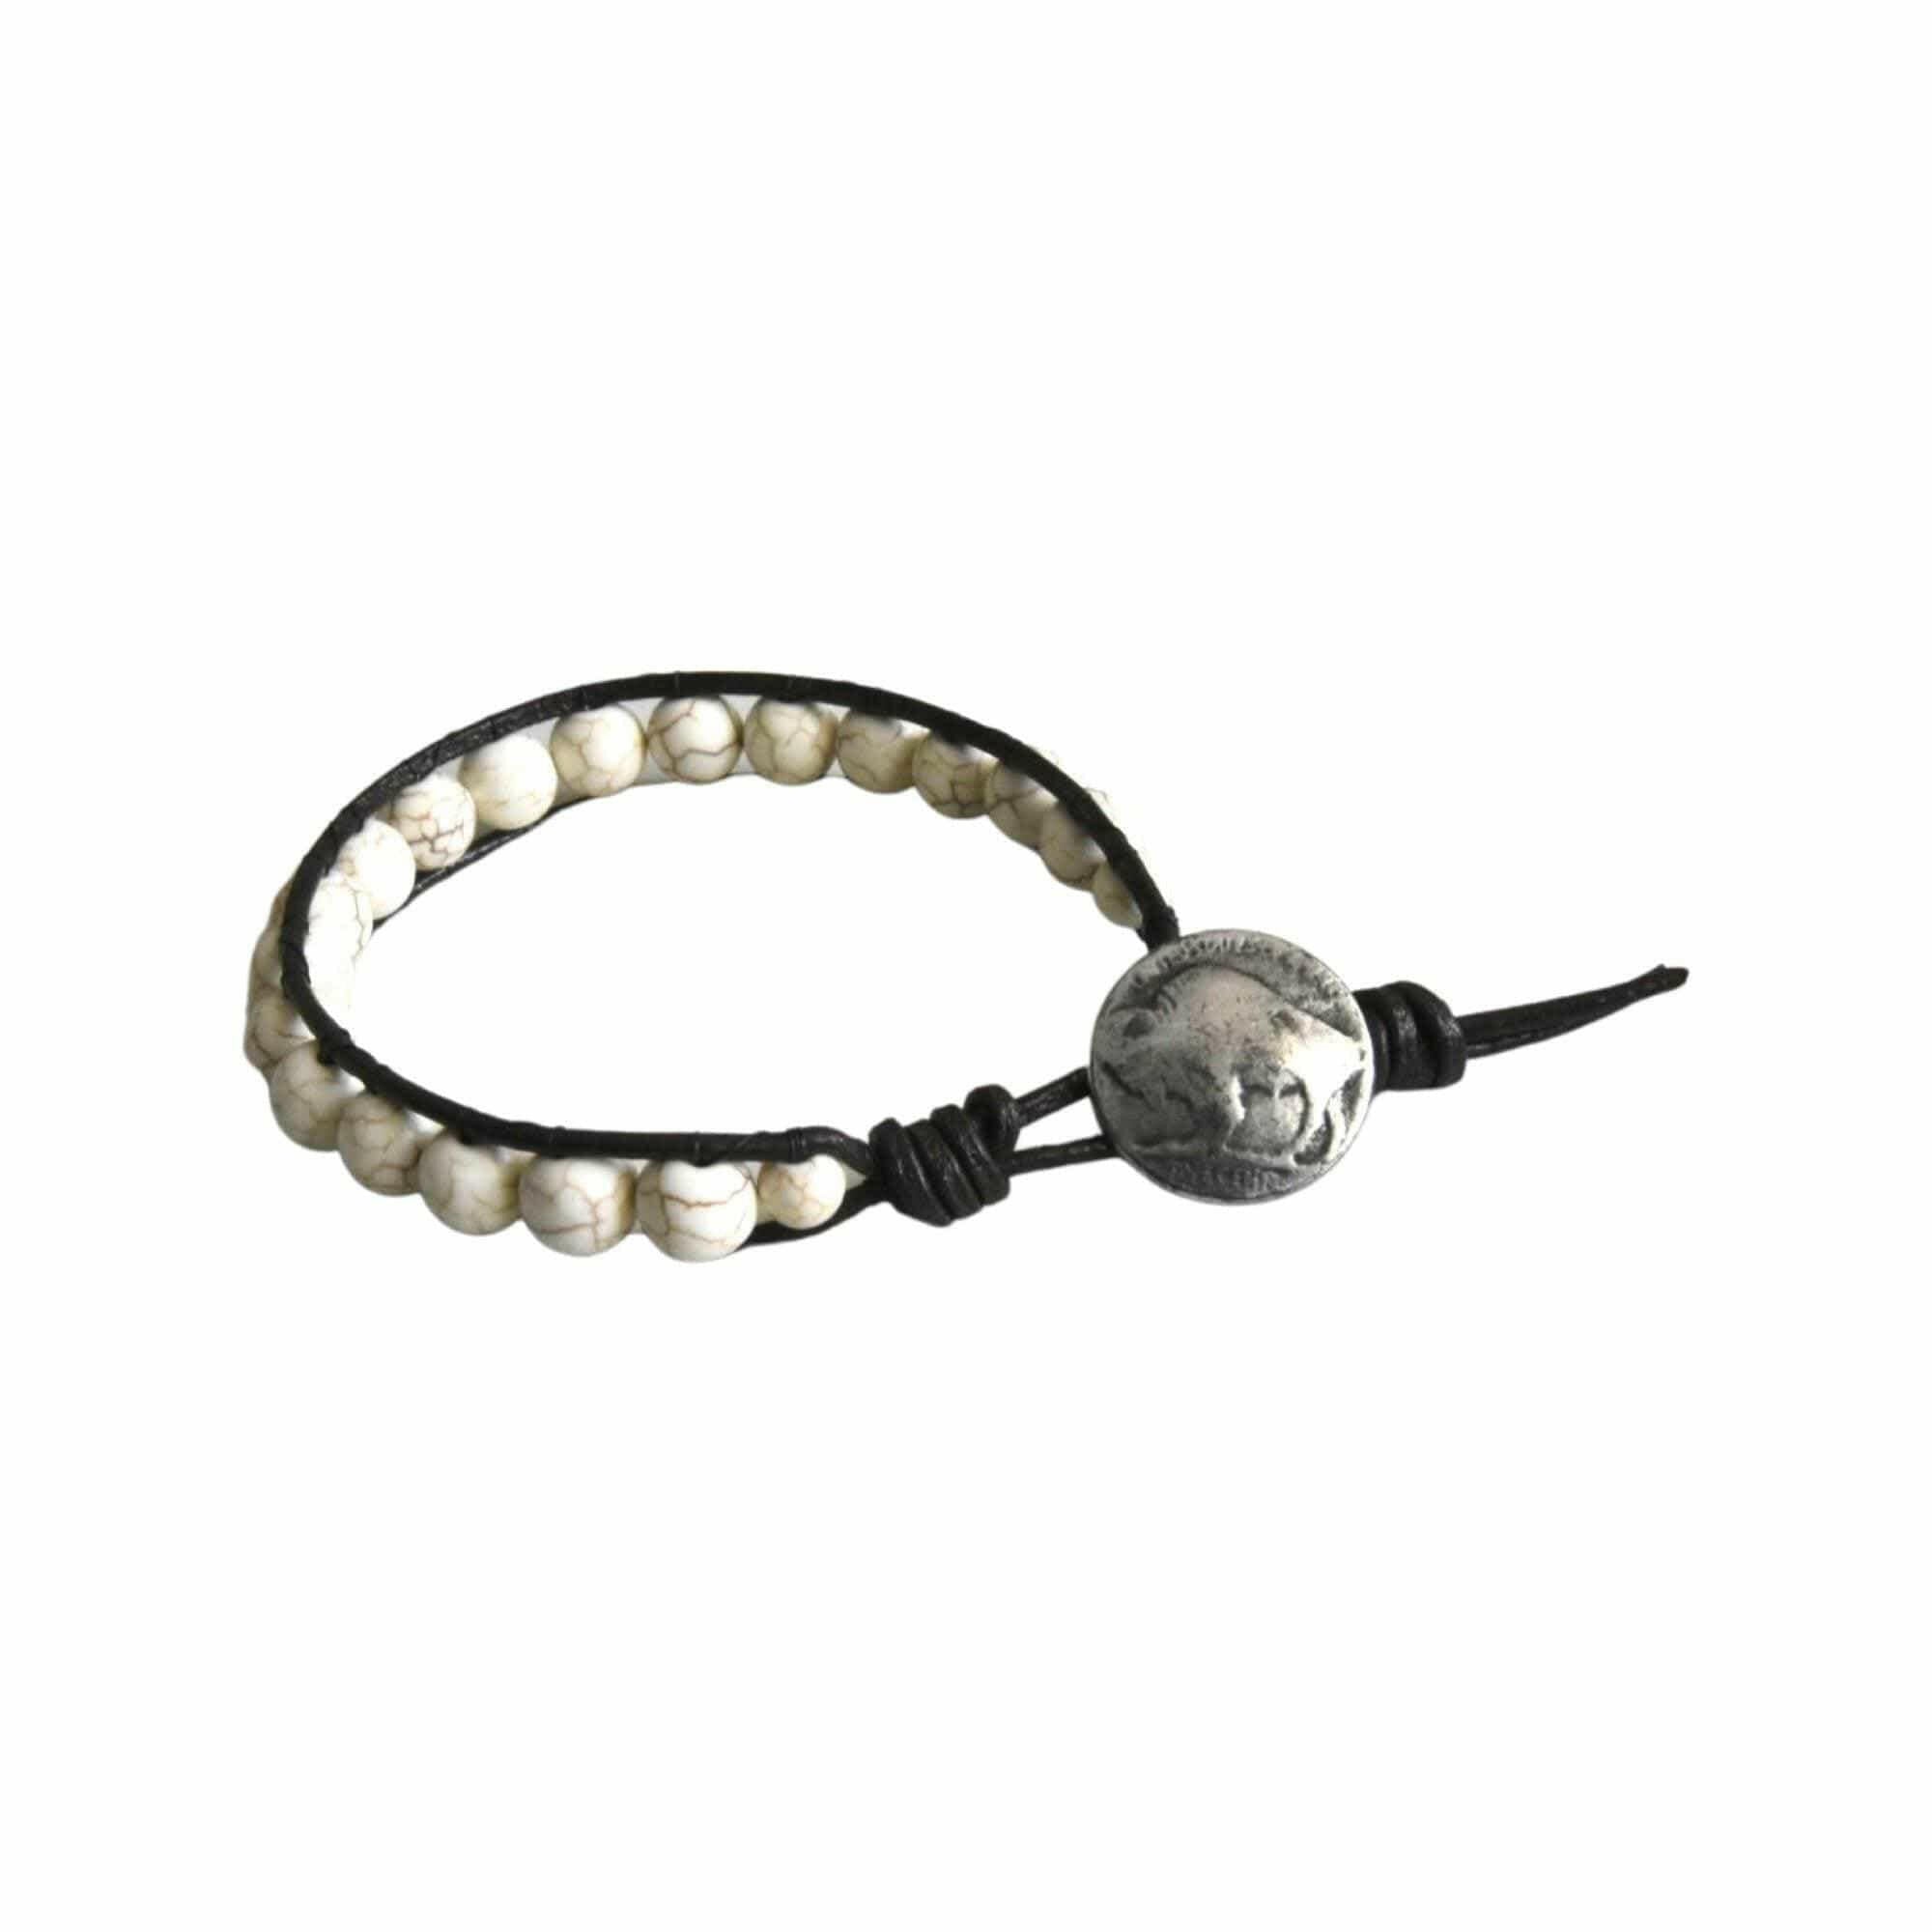 Bec Sue Jewelry Shop bracelets 6.5 / white/brown / turquoise/brown leather Leather Turquoise Jewelry, White Turquoise Bracelet, White Turquoise Bracelet Tags 392